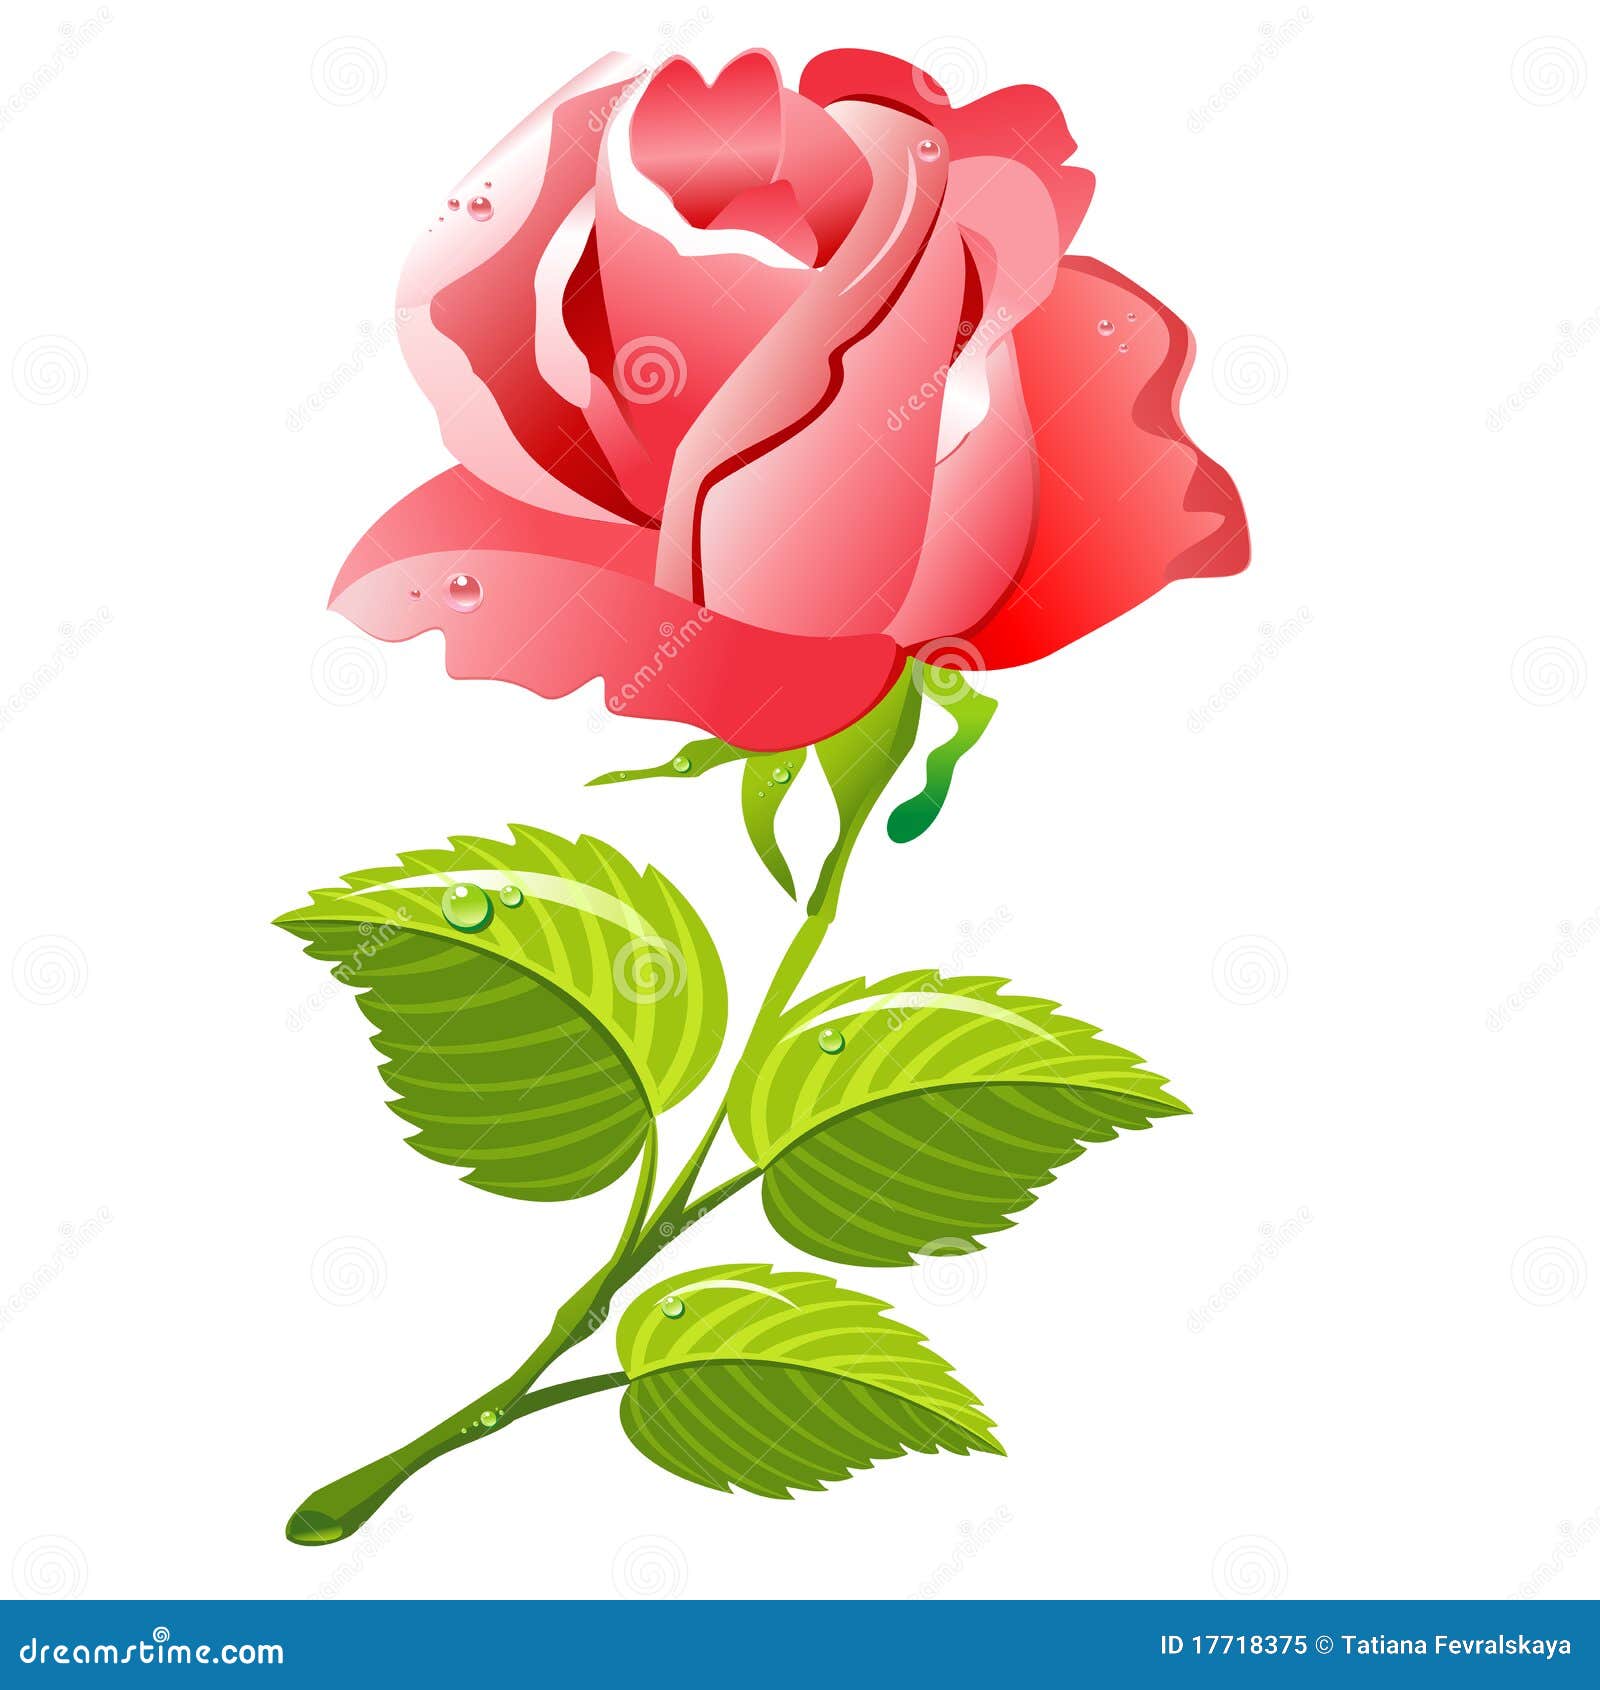 Rose stock vector. Illustration of prickly, seasonal - 17718375